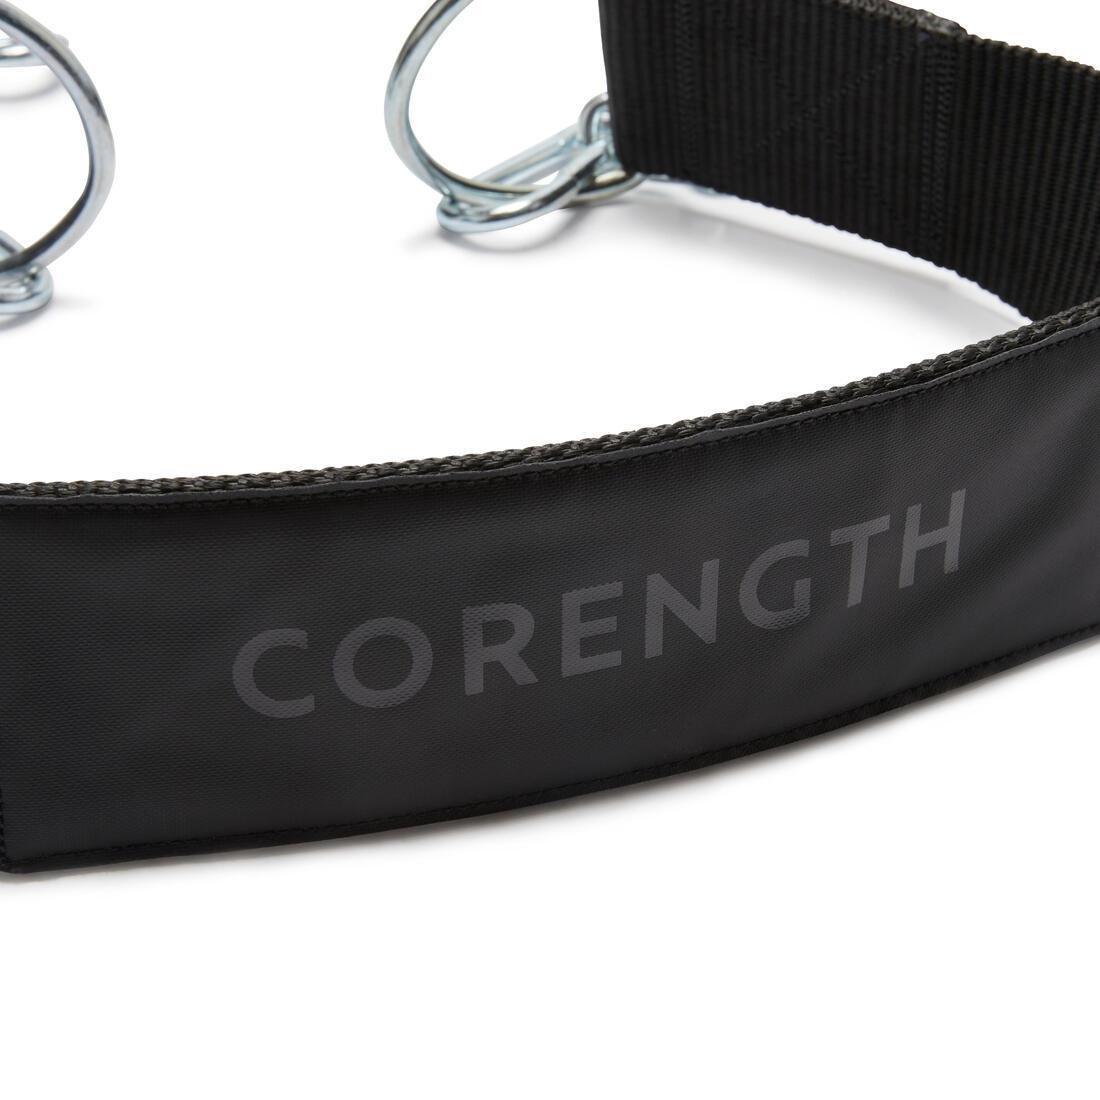 CORENGTH - Weighted Weight Training Belt, Black